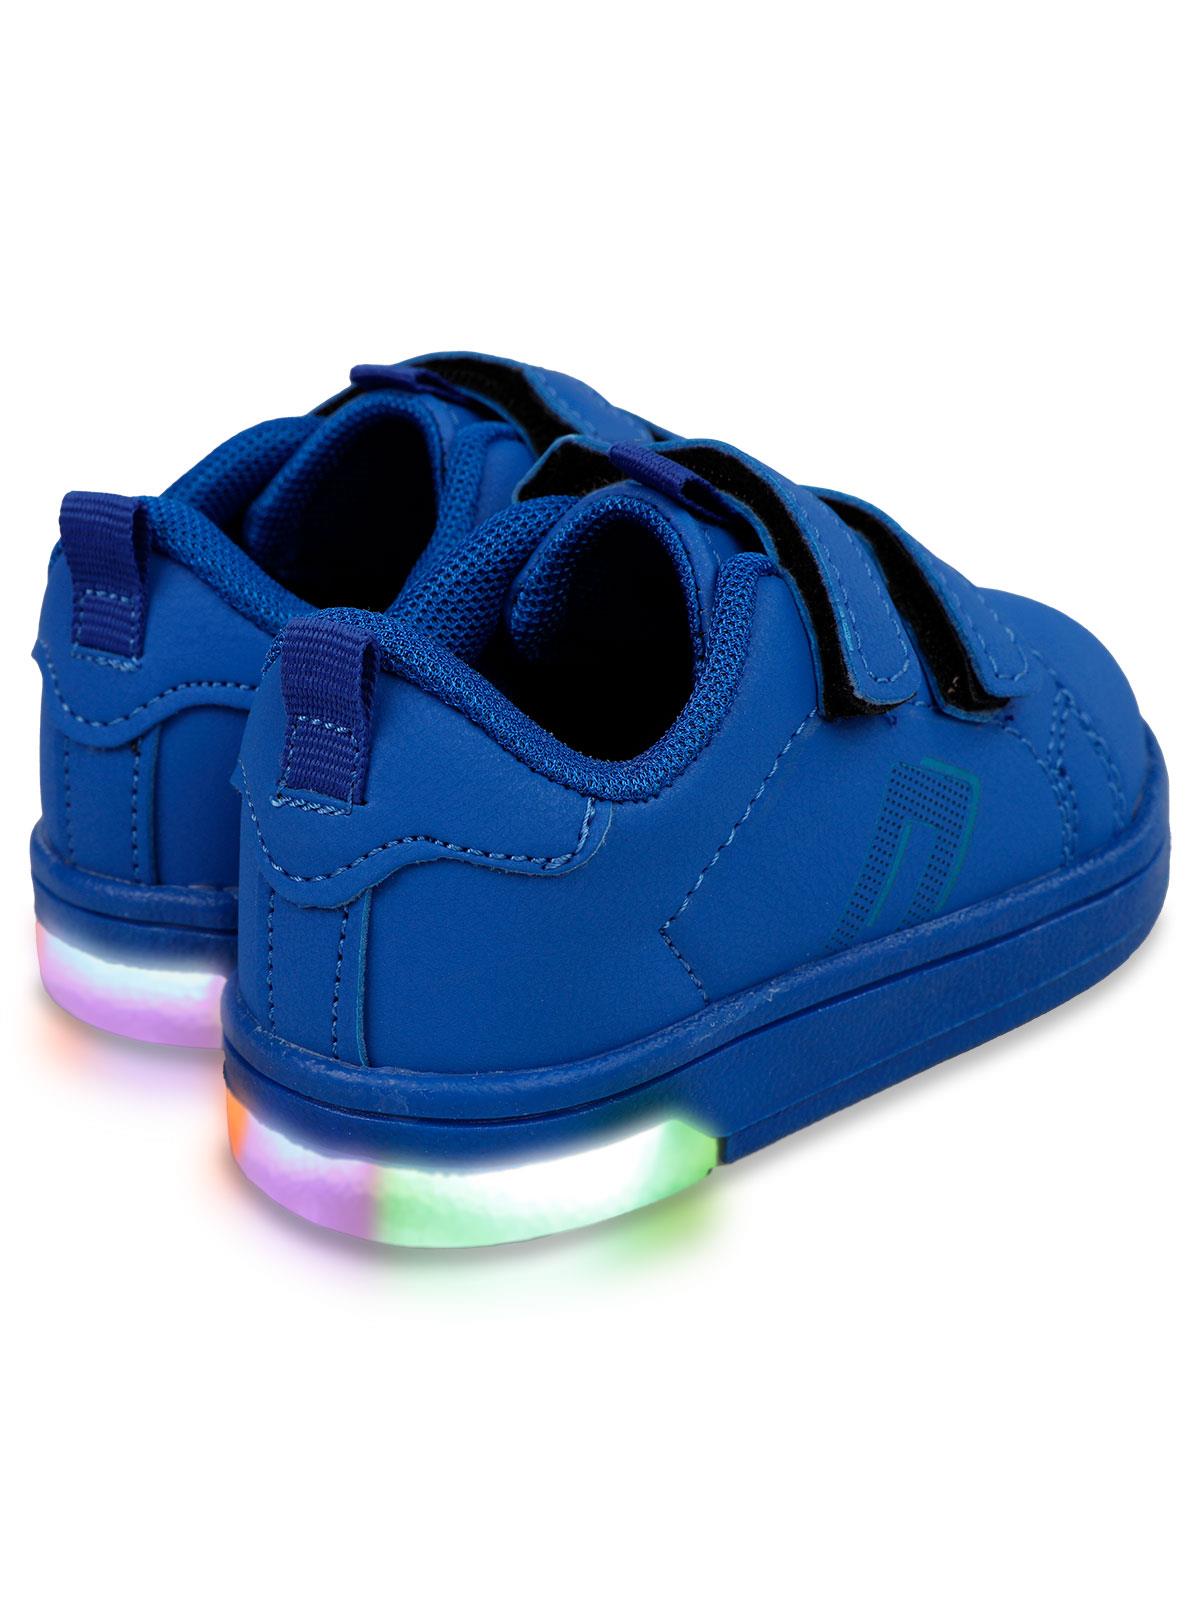 Adidasi GlowKicks cu luminite unisex Albastru